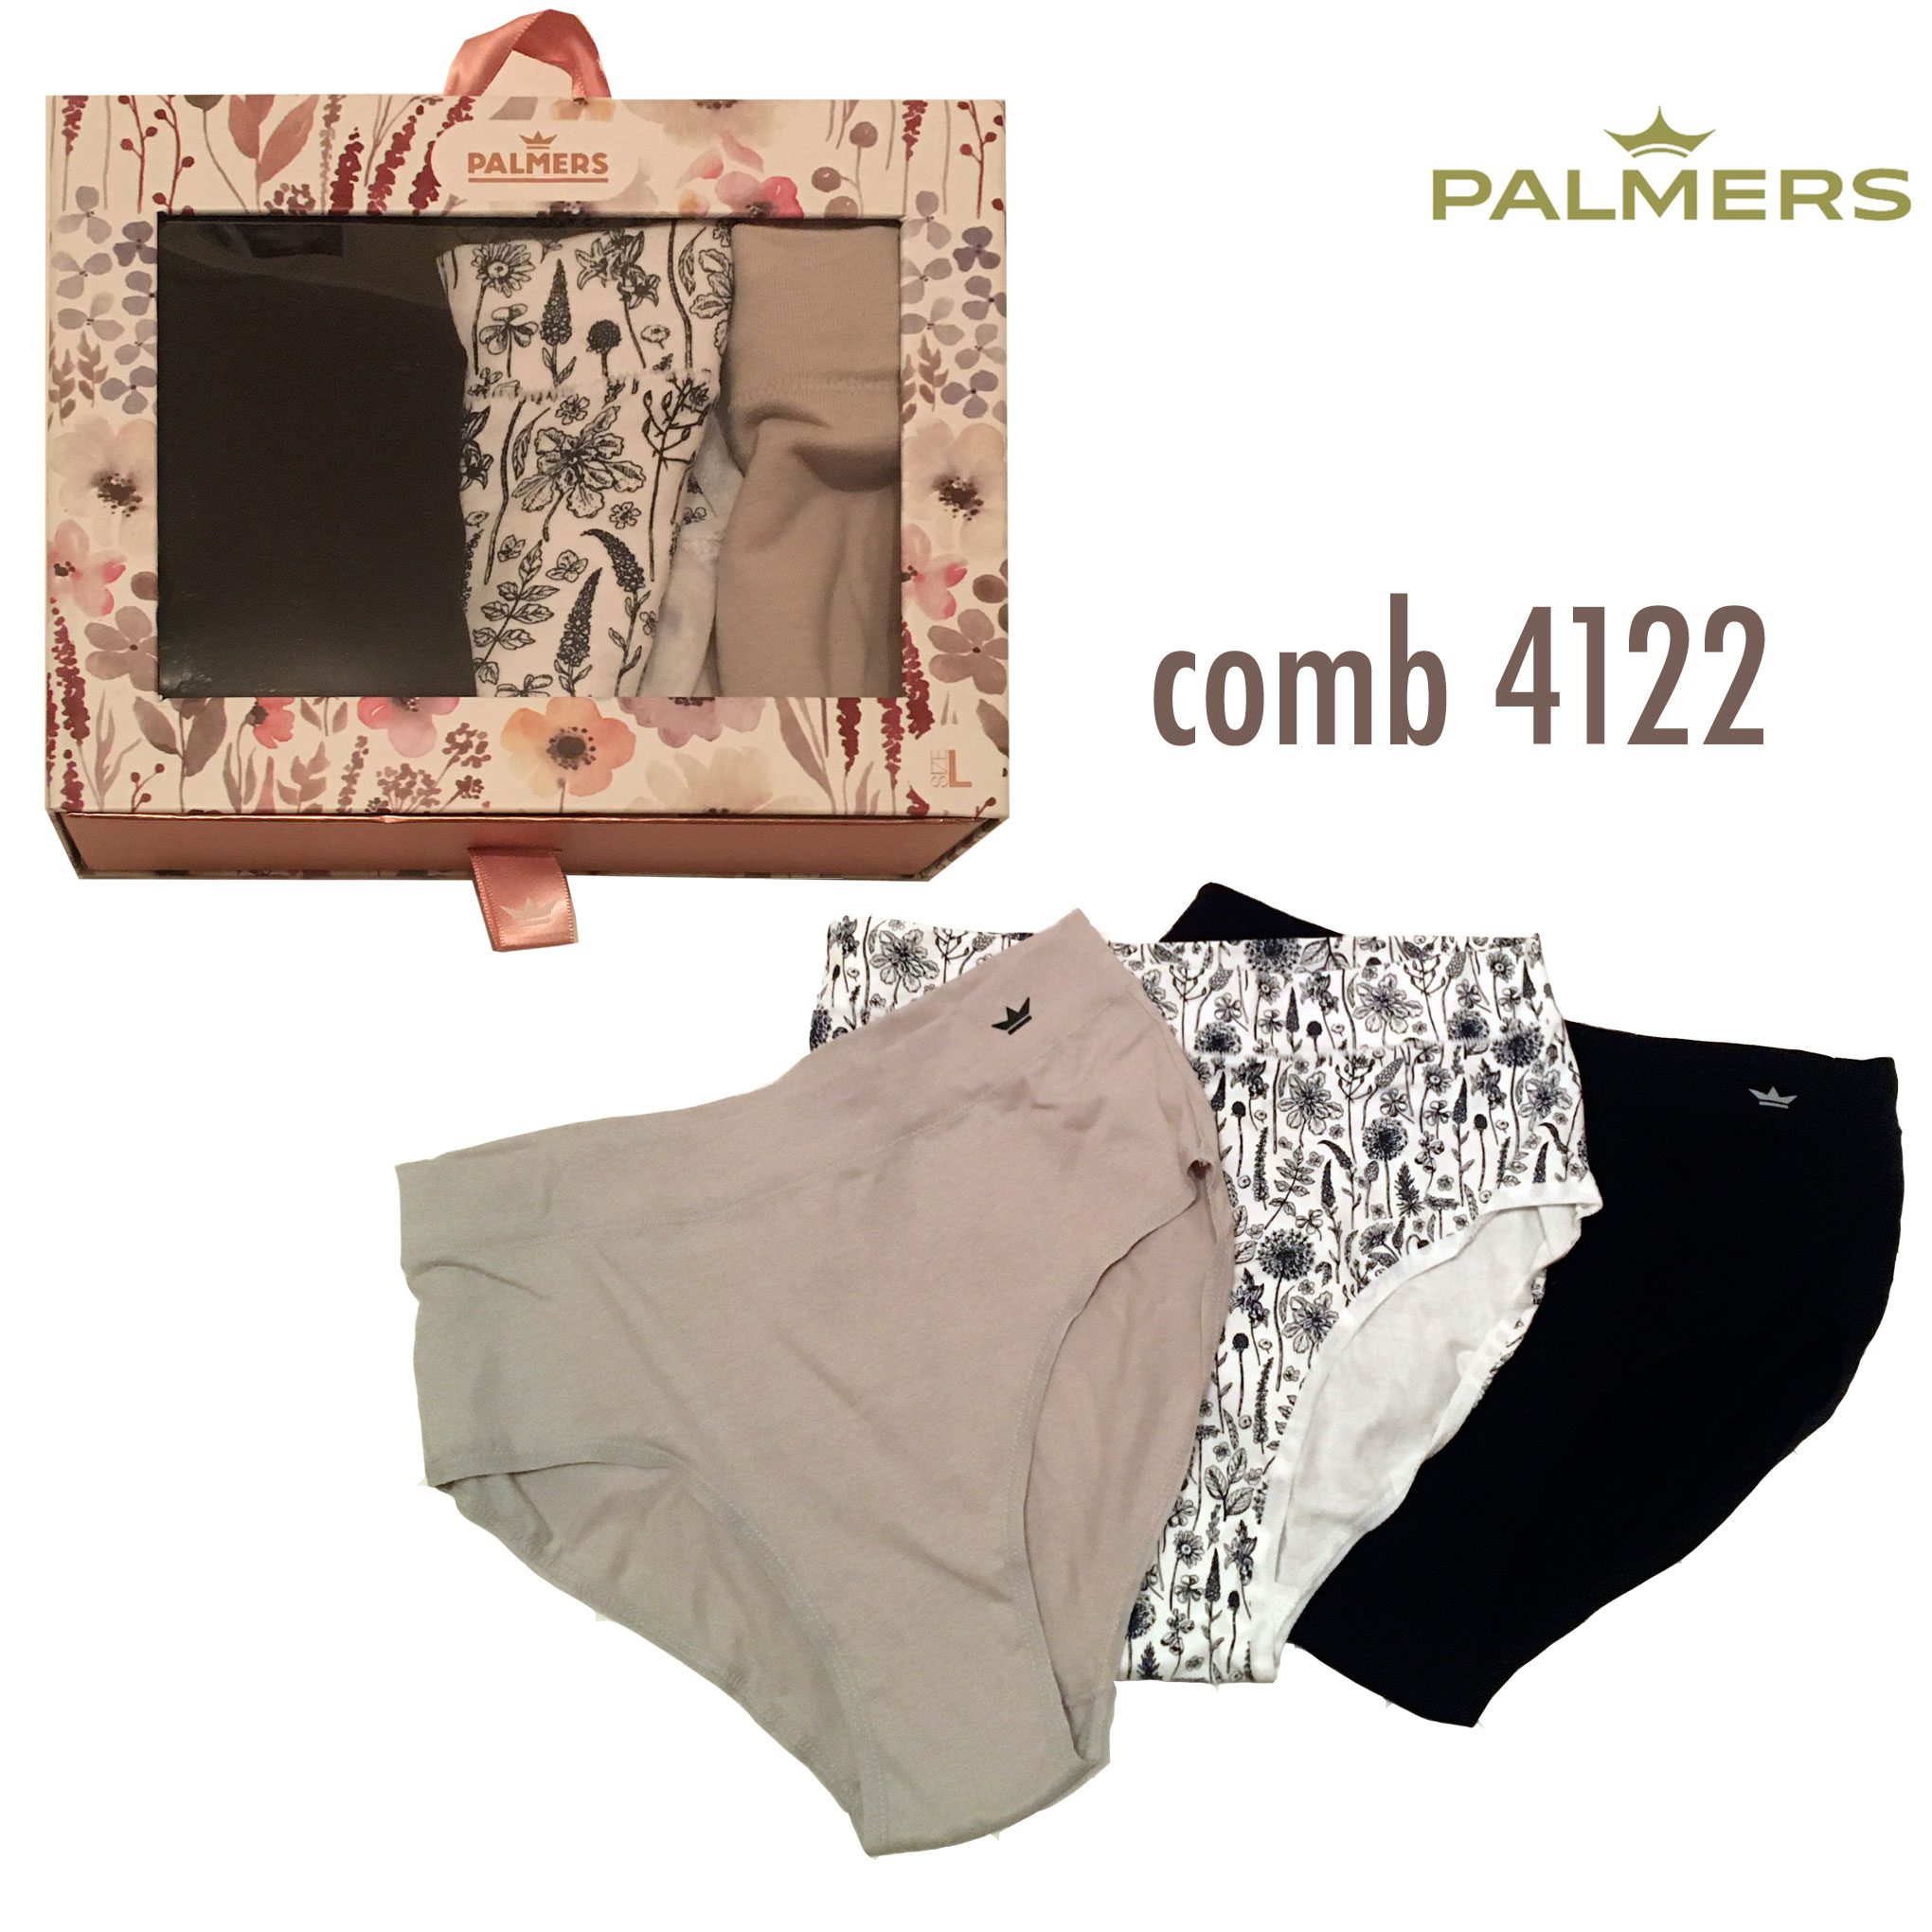 P323-Hikini-Algodon-Palmers-comb4122